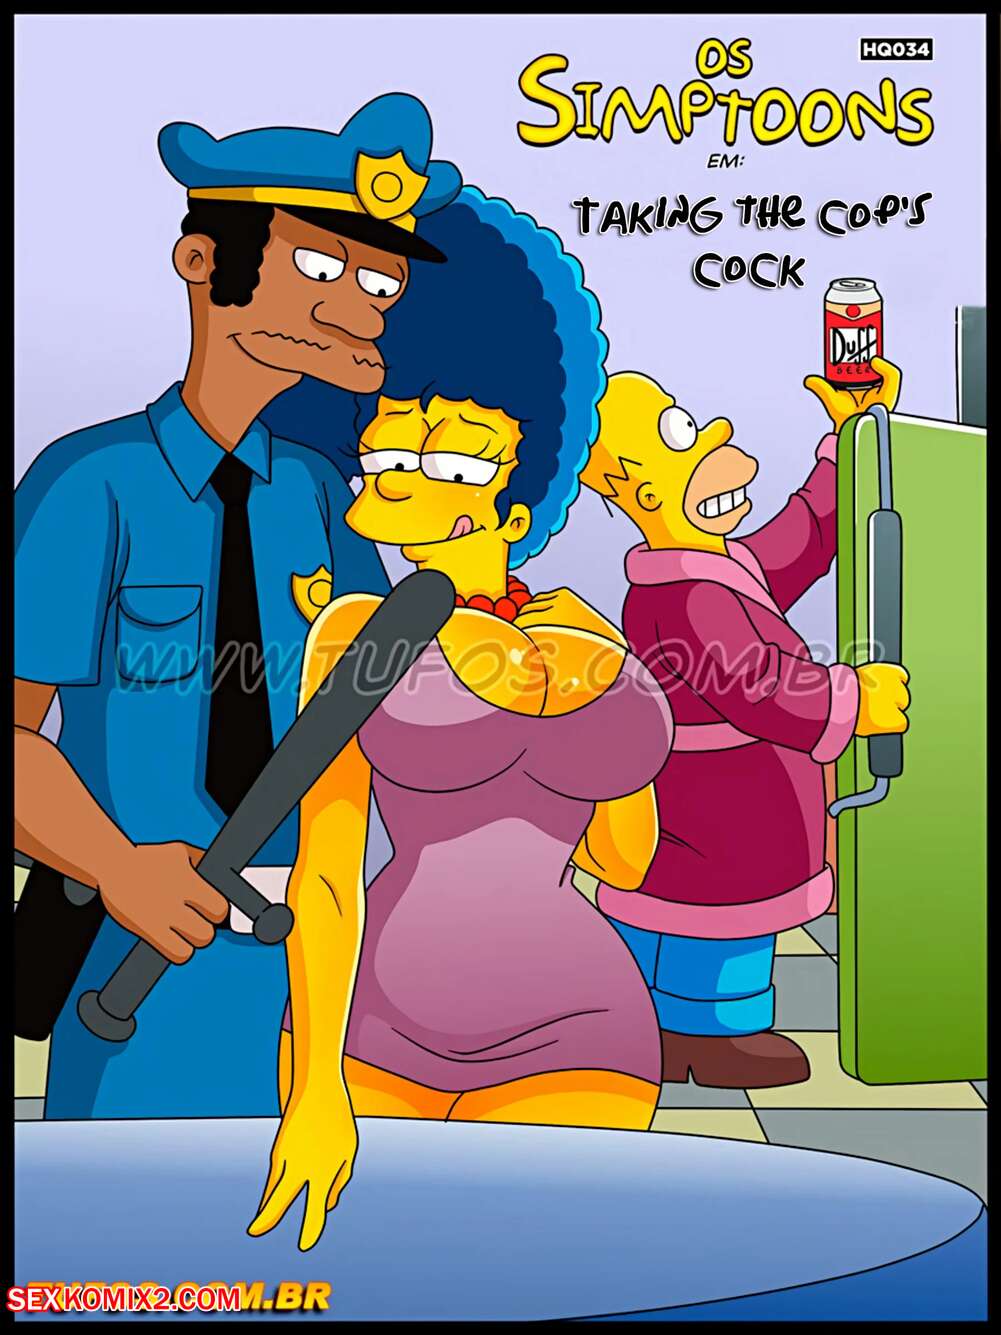 Porno comic simpsons The Simpsons